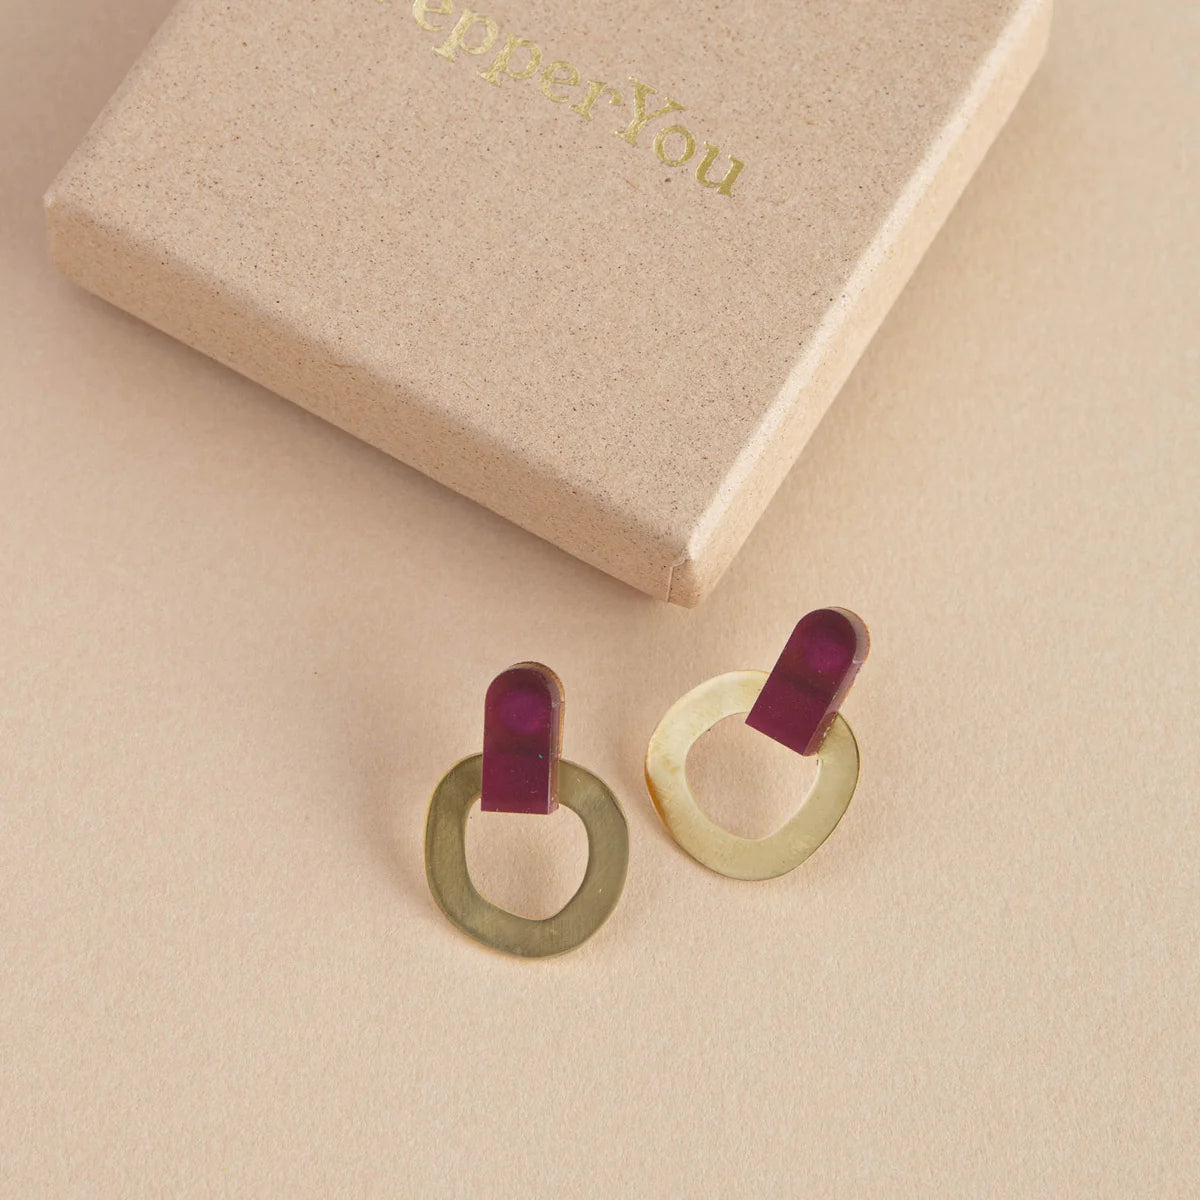 Around Brass Stud Earrings in Aubergine - The Bristol Artisan Handmade Sustainable Gifts and Homewares.